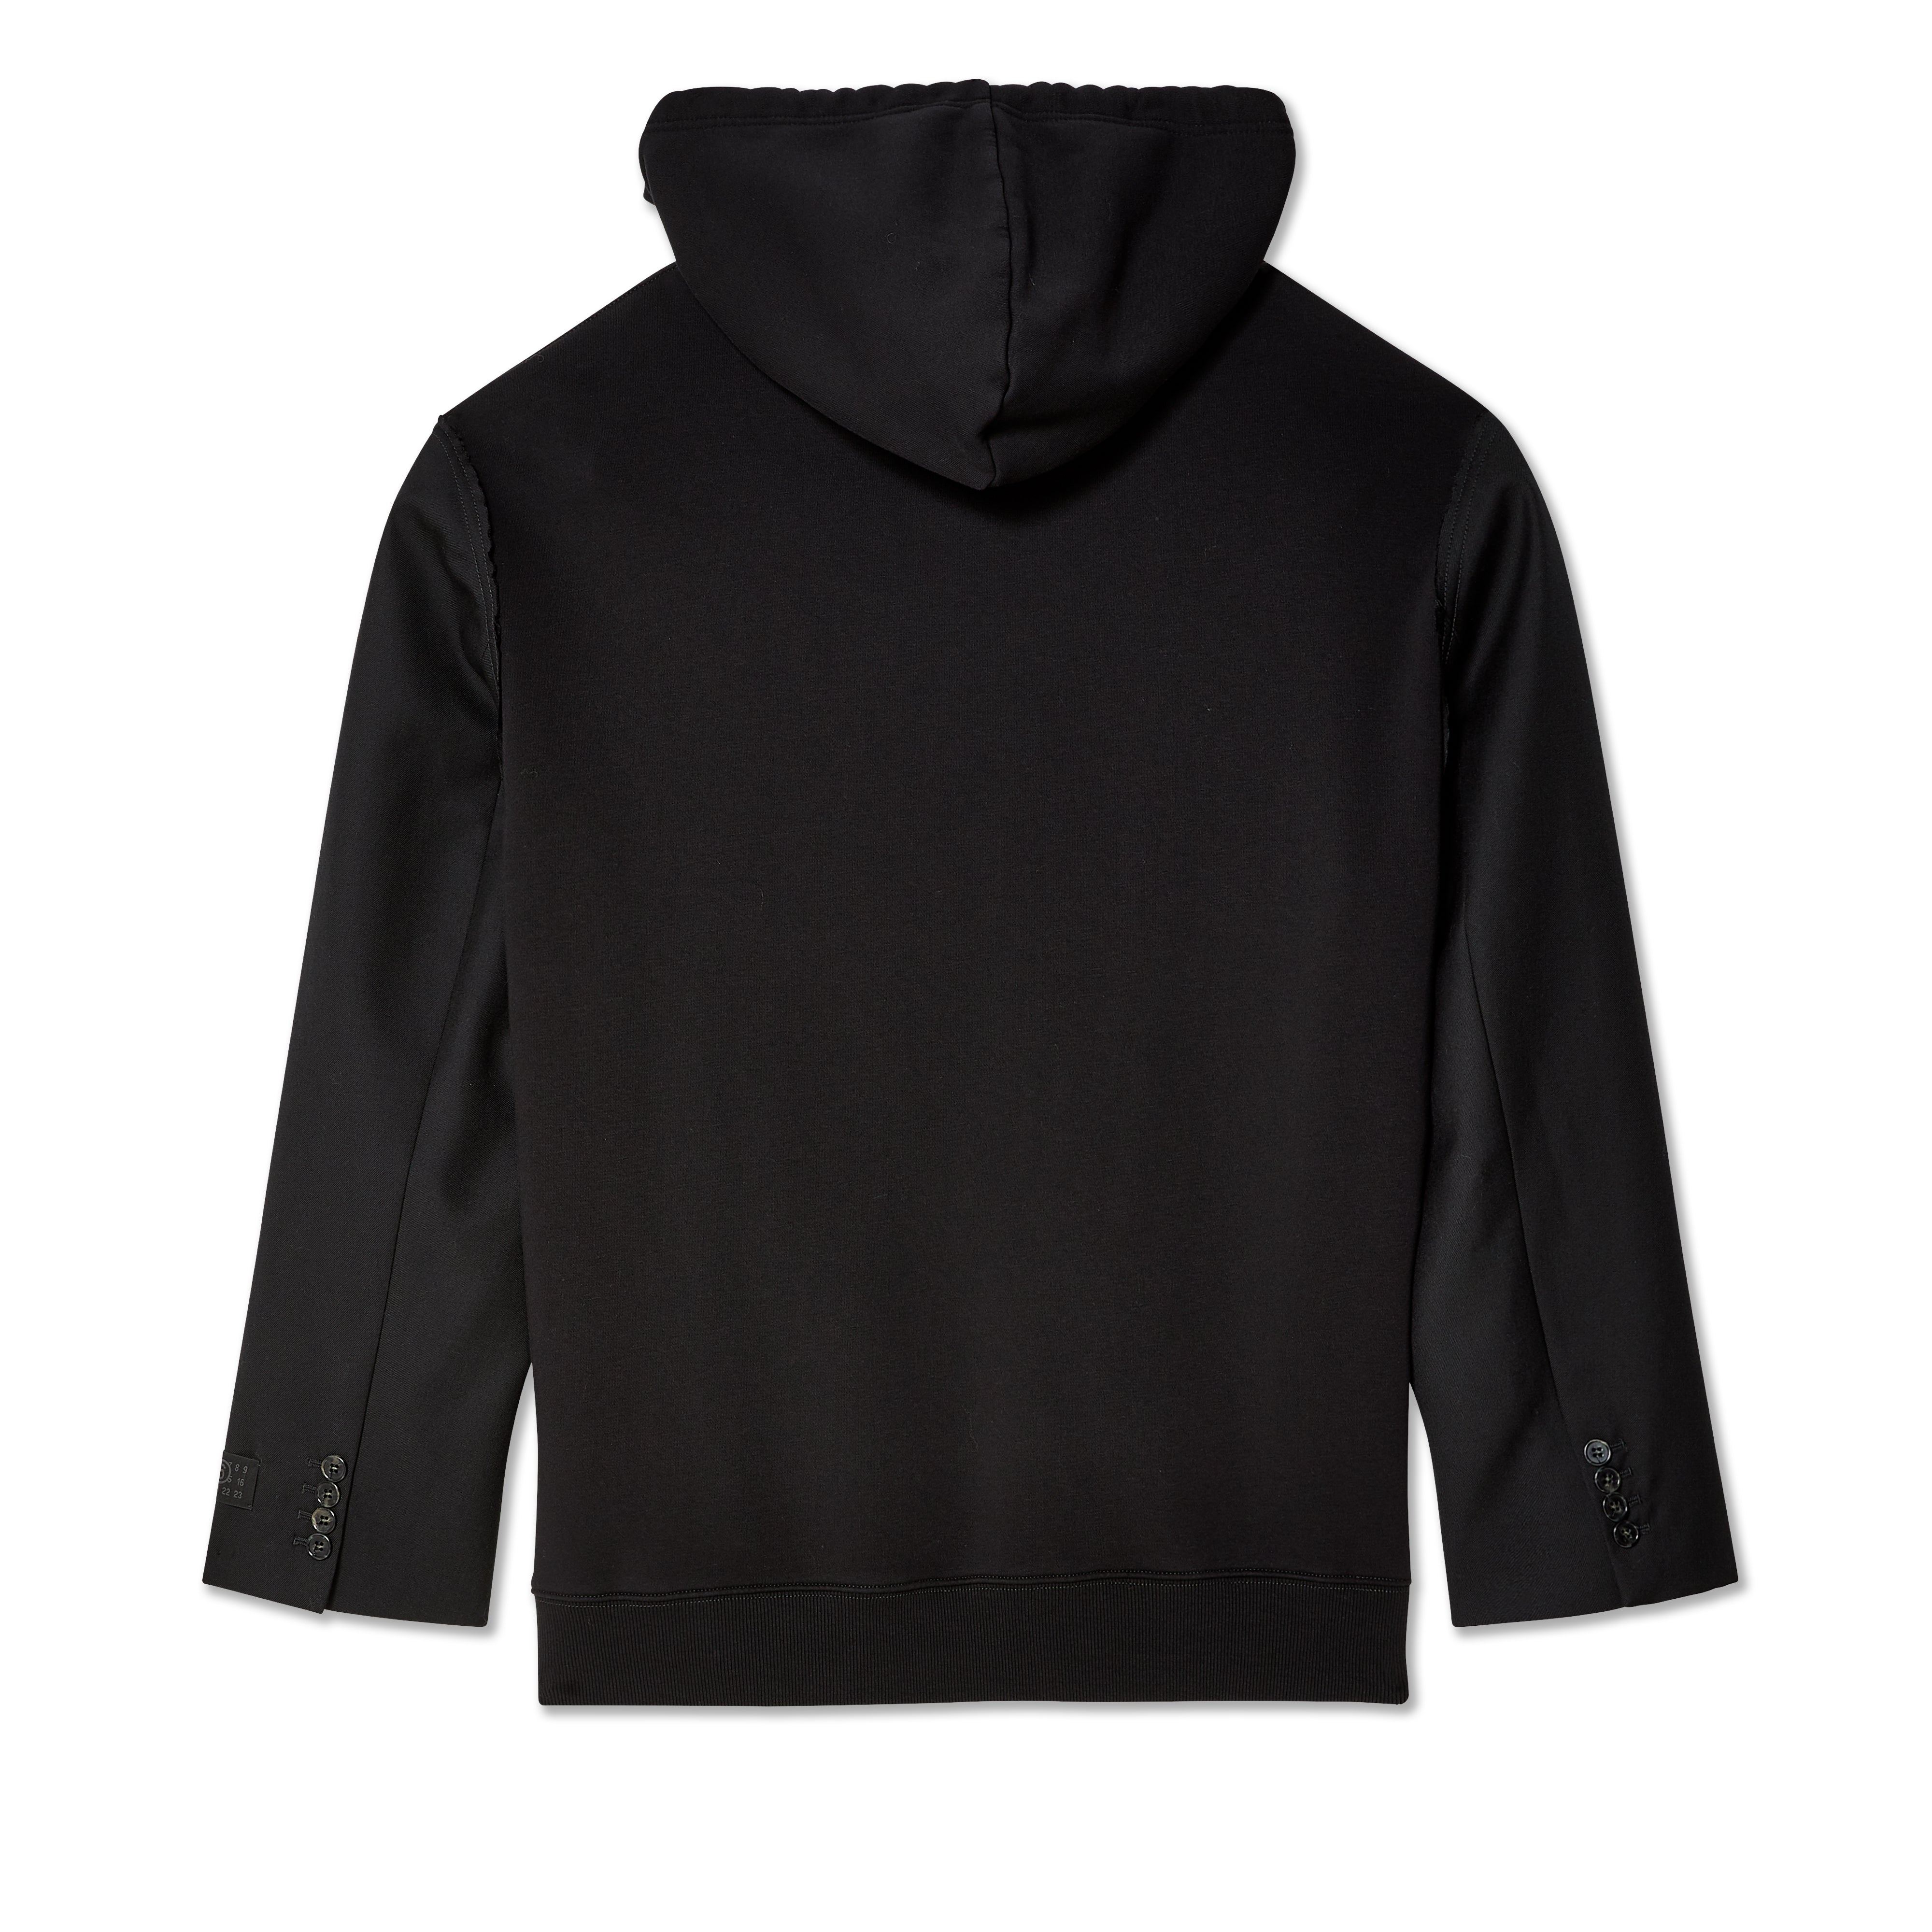 MM6 Maison Margiela - Women's Sweatshirt - (Black)